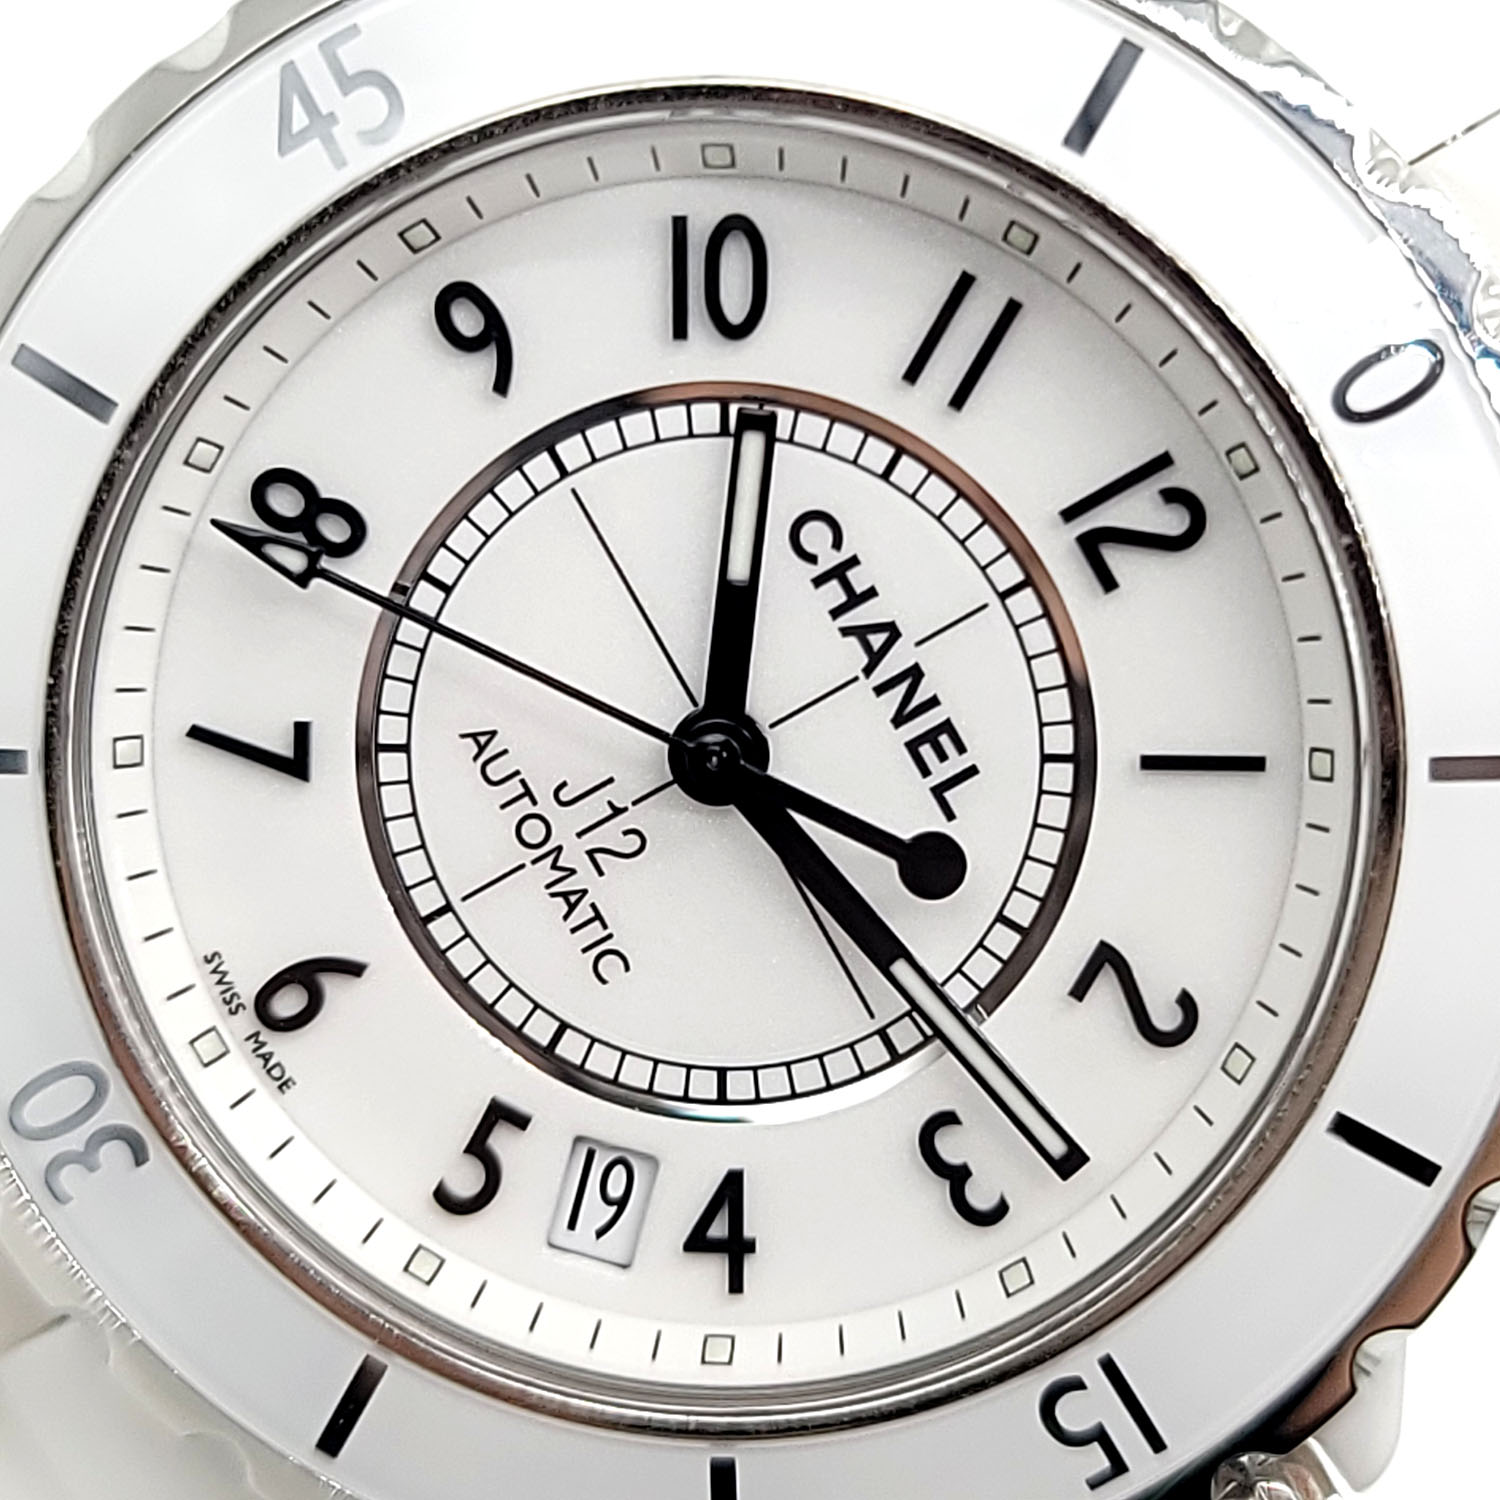 New Chanel J12 White Ceramic Wristwatch Authentic